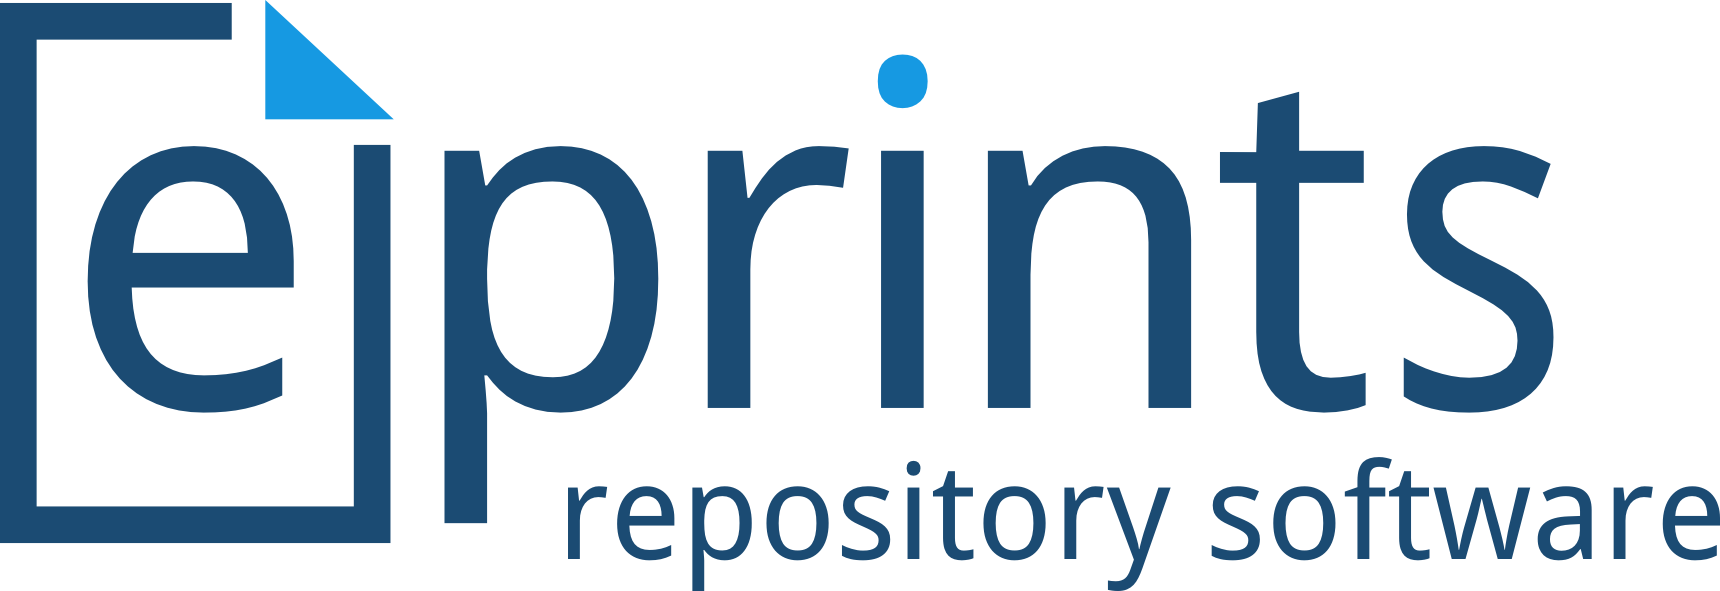 eprints logo